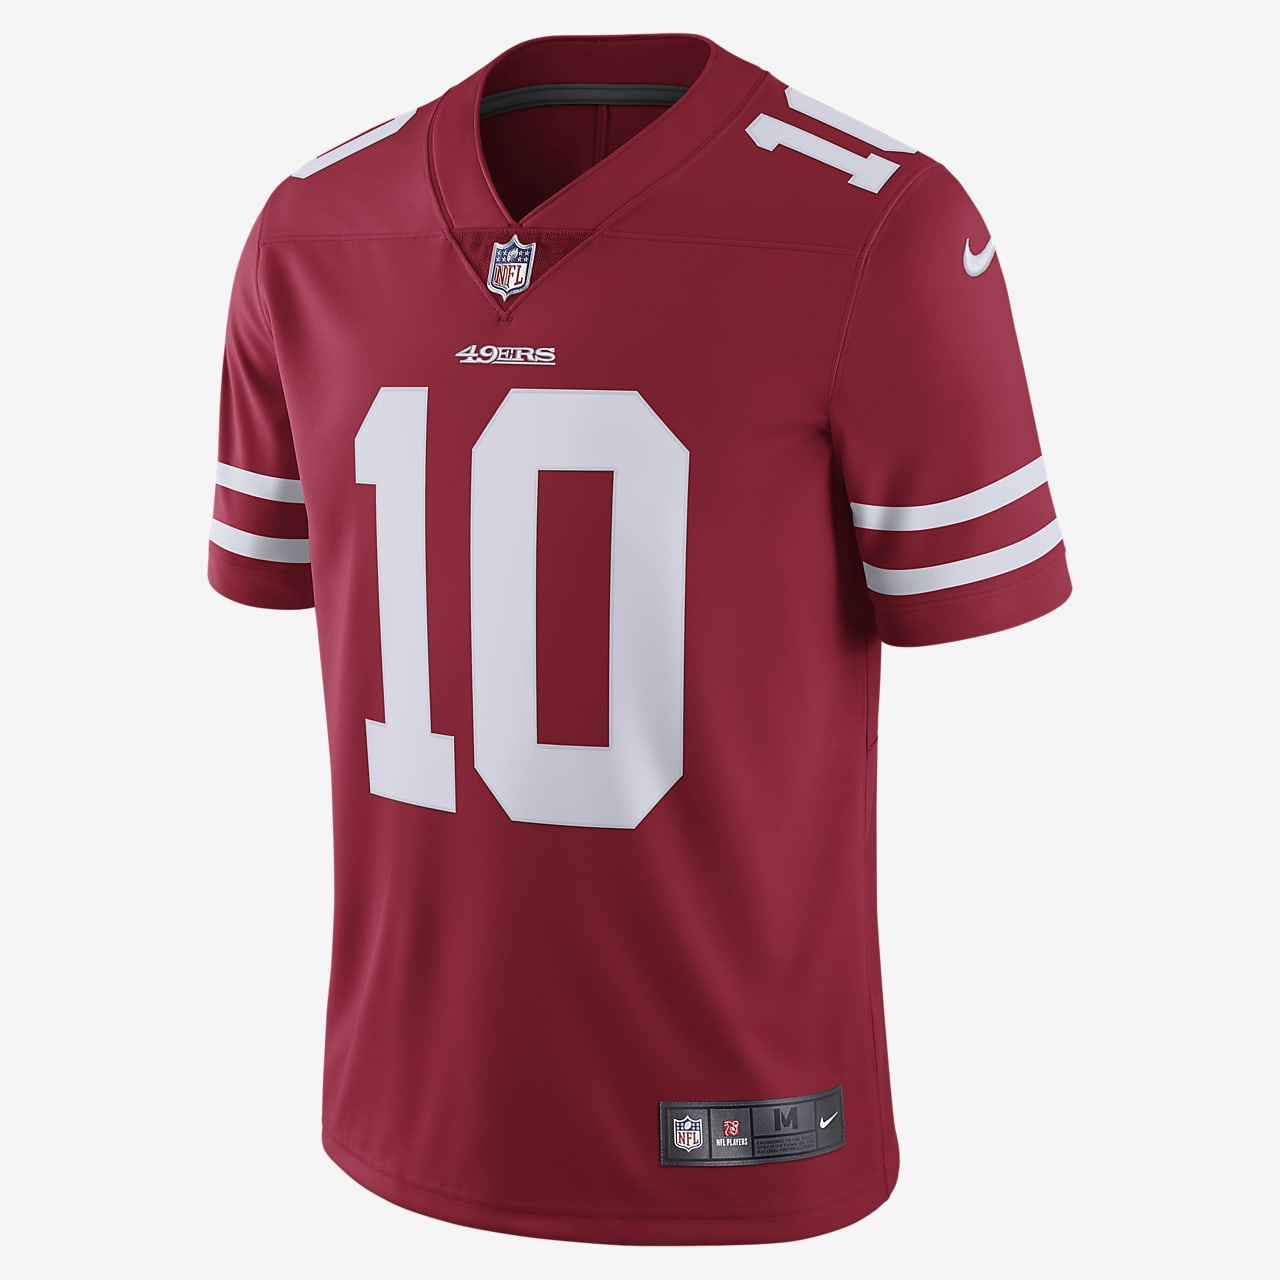 geloof Pat spreiding NFL San Francisco 49ers Limited (Jimmy Garoppolo) Men's Football Jersey.  Nike.com